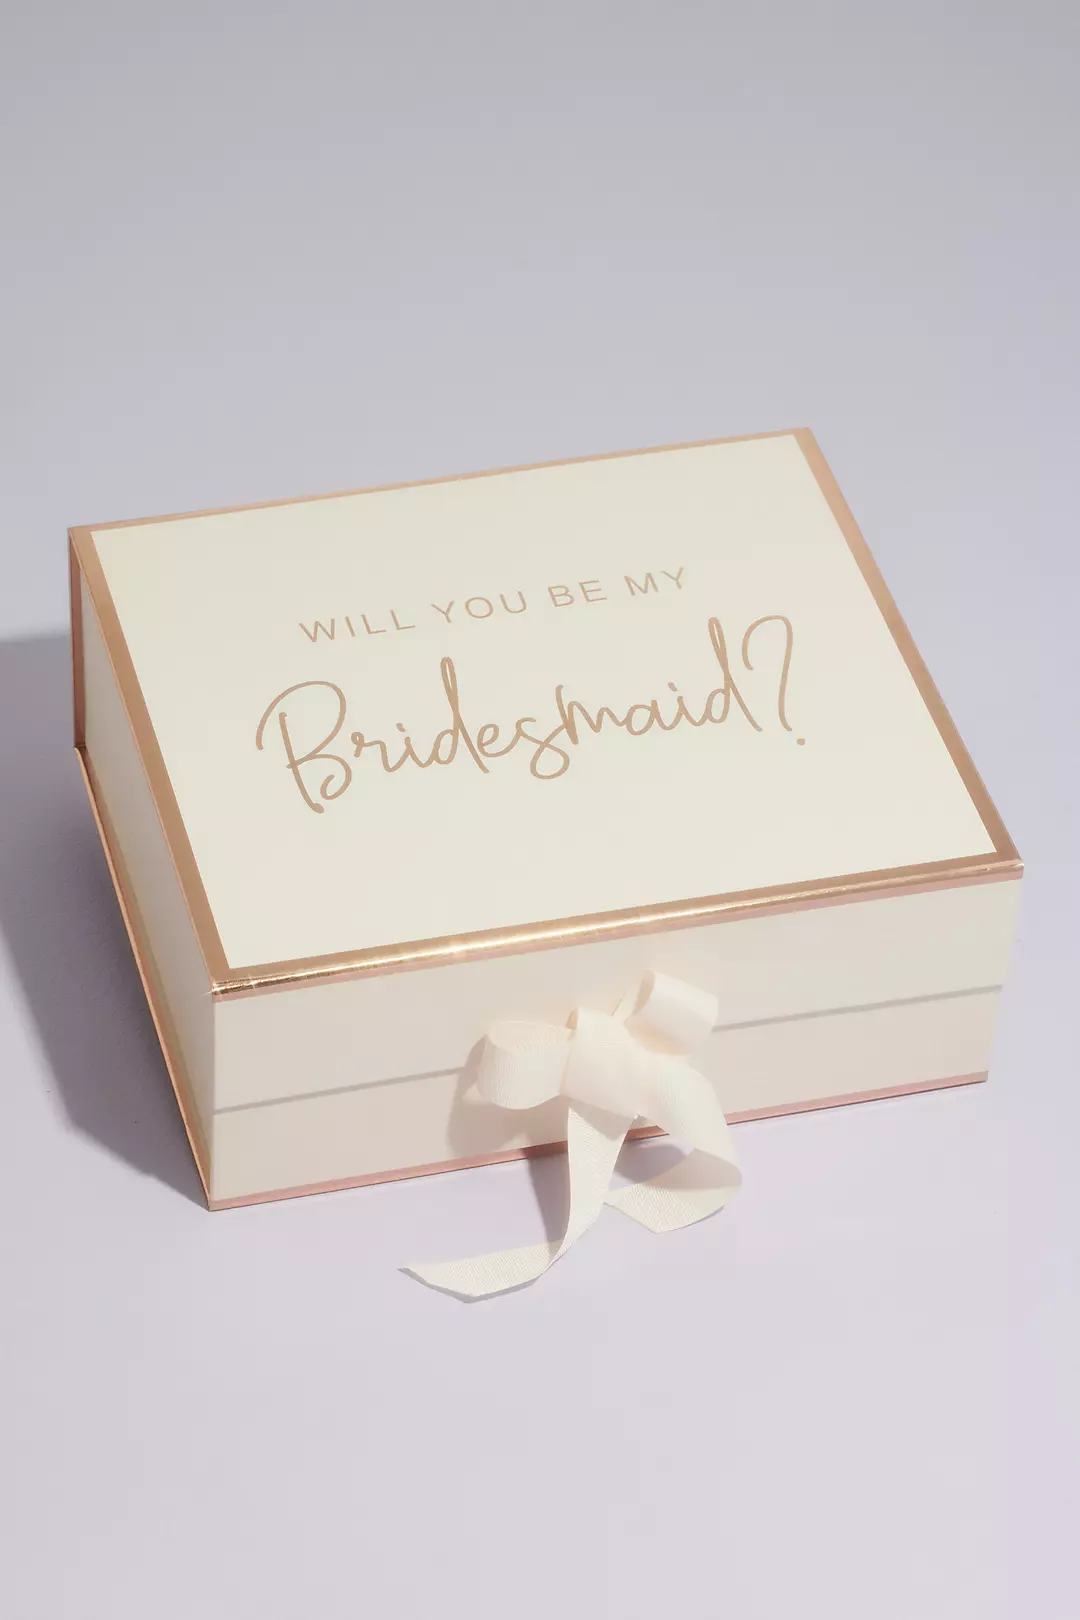 Will You Be My Bridesmaid Gift Box Image